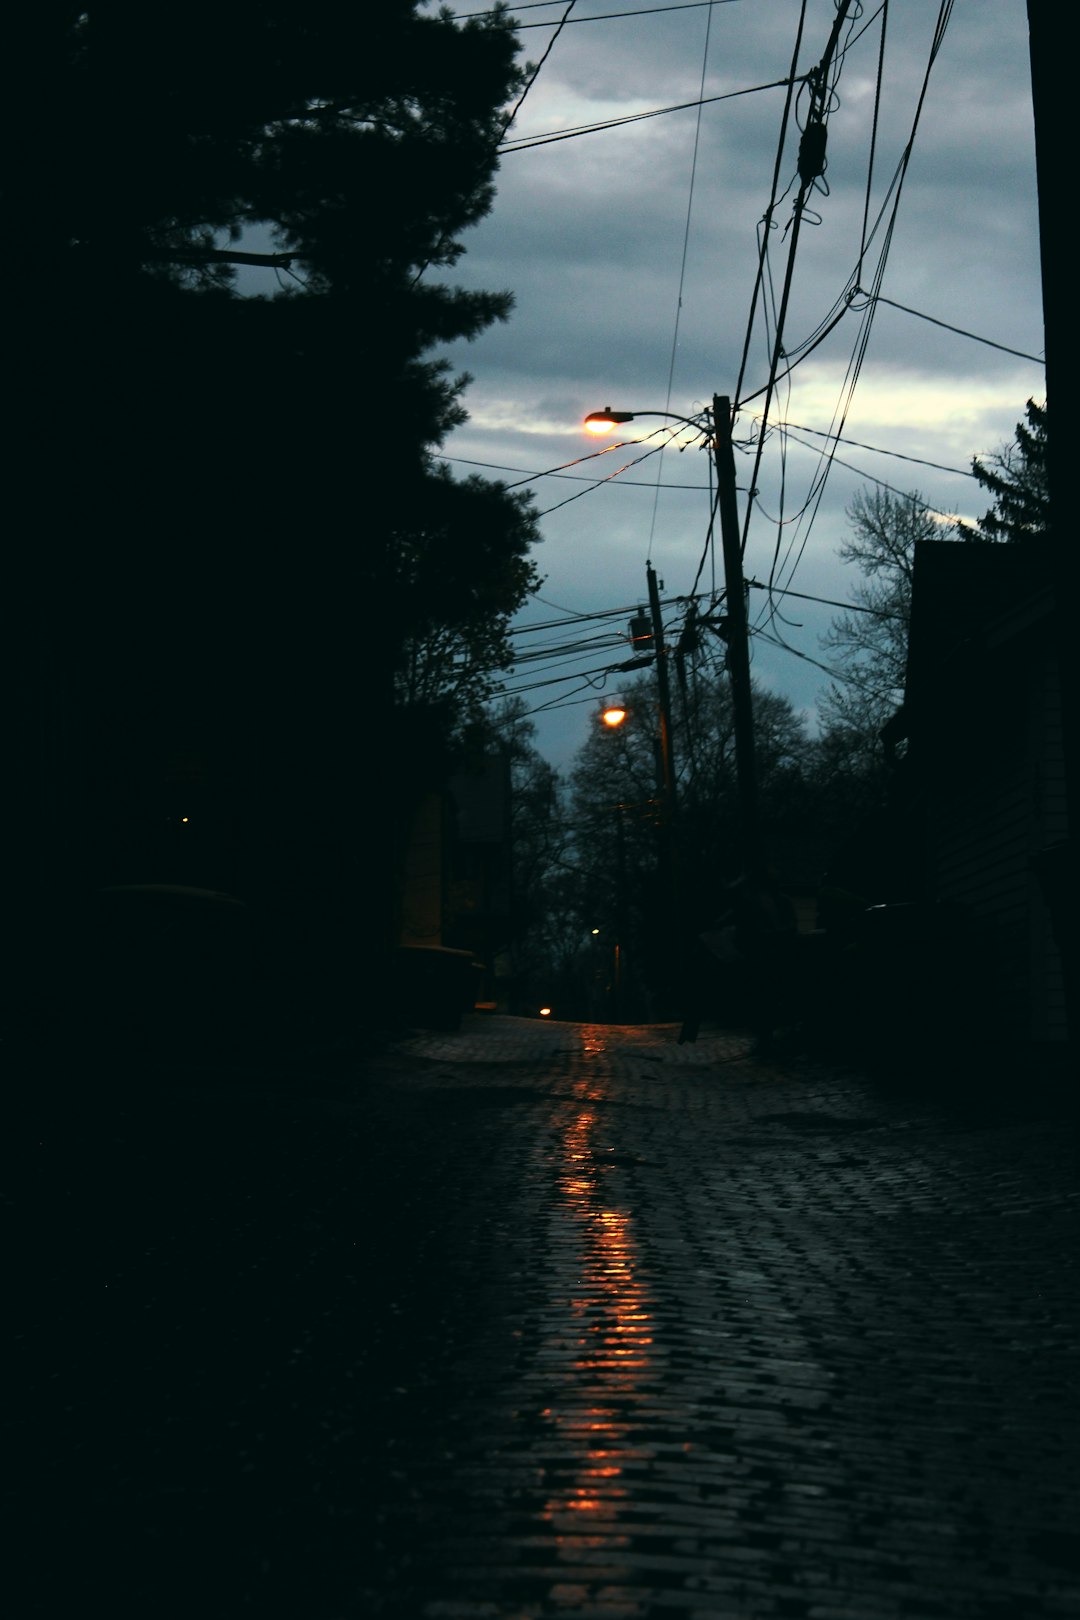 black street light during night time